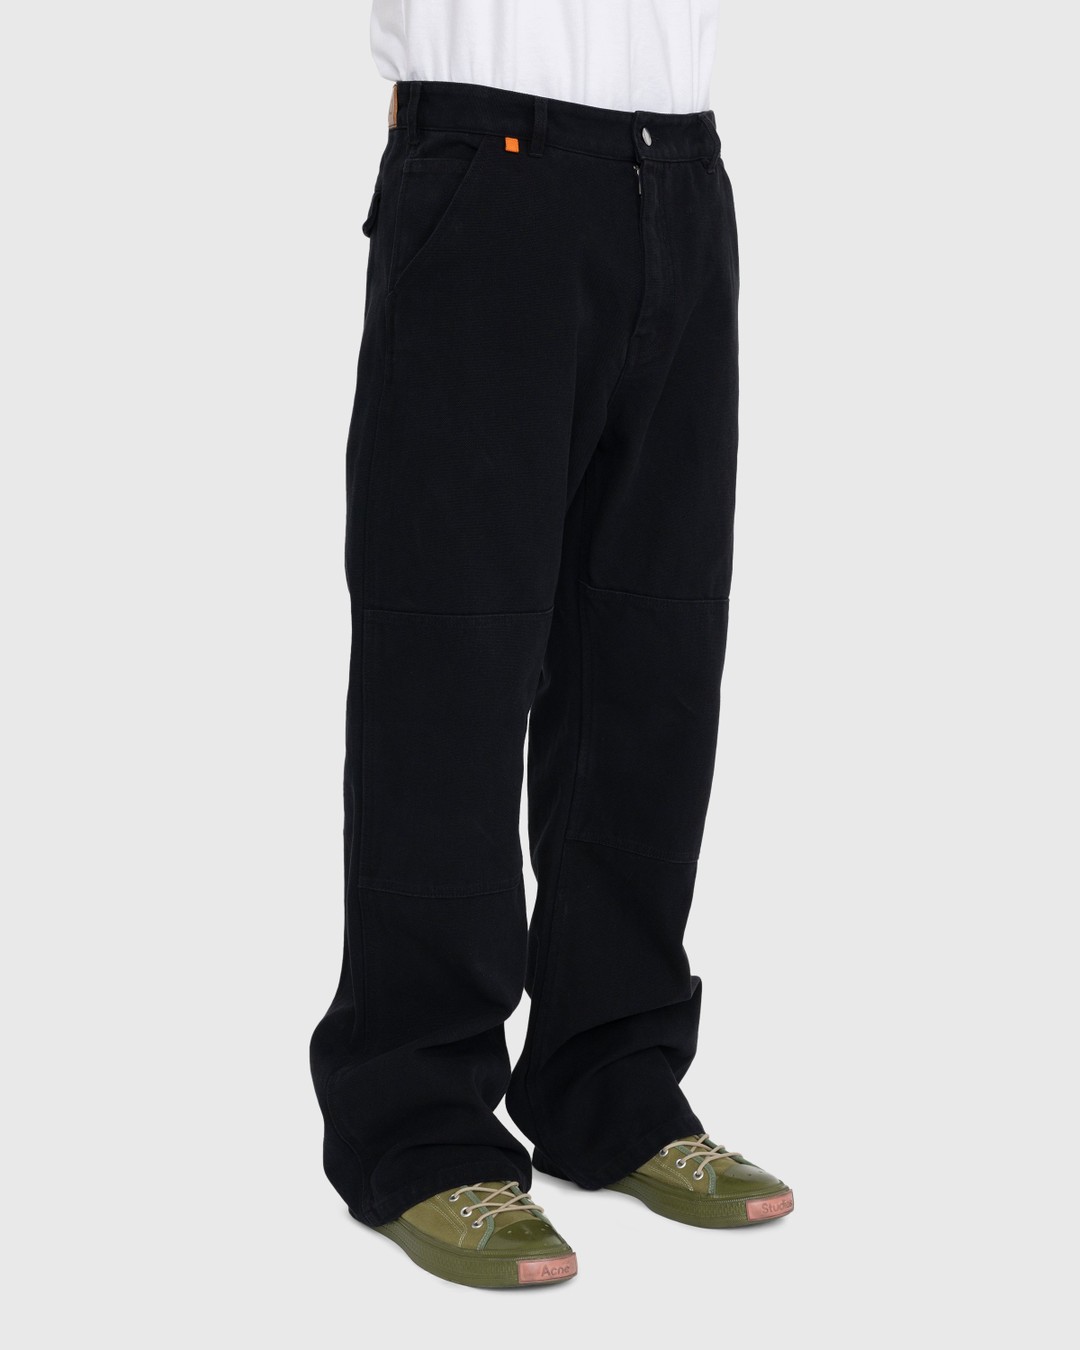 Acne Studios – Cotton Workwear Trousers Black - Pants - Black - Image 3